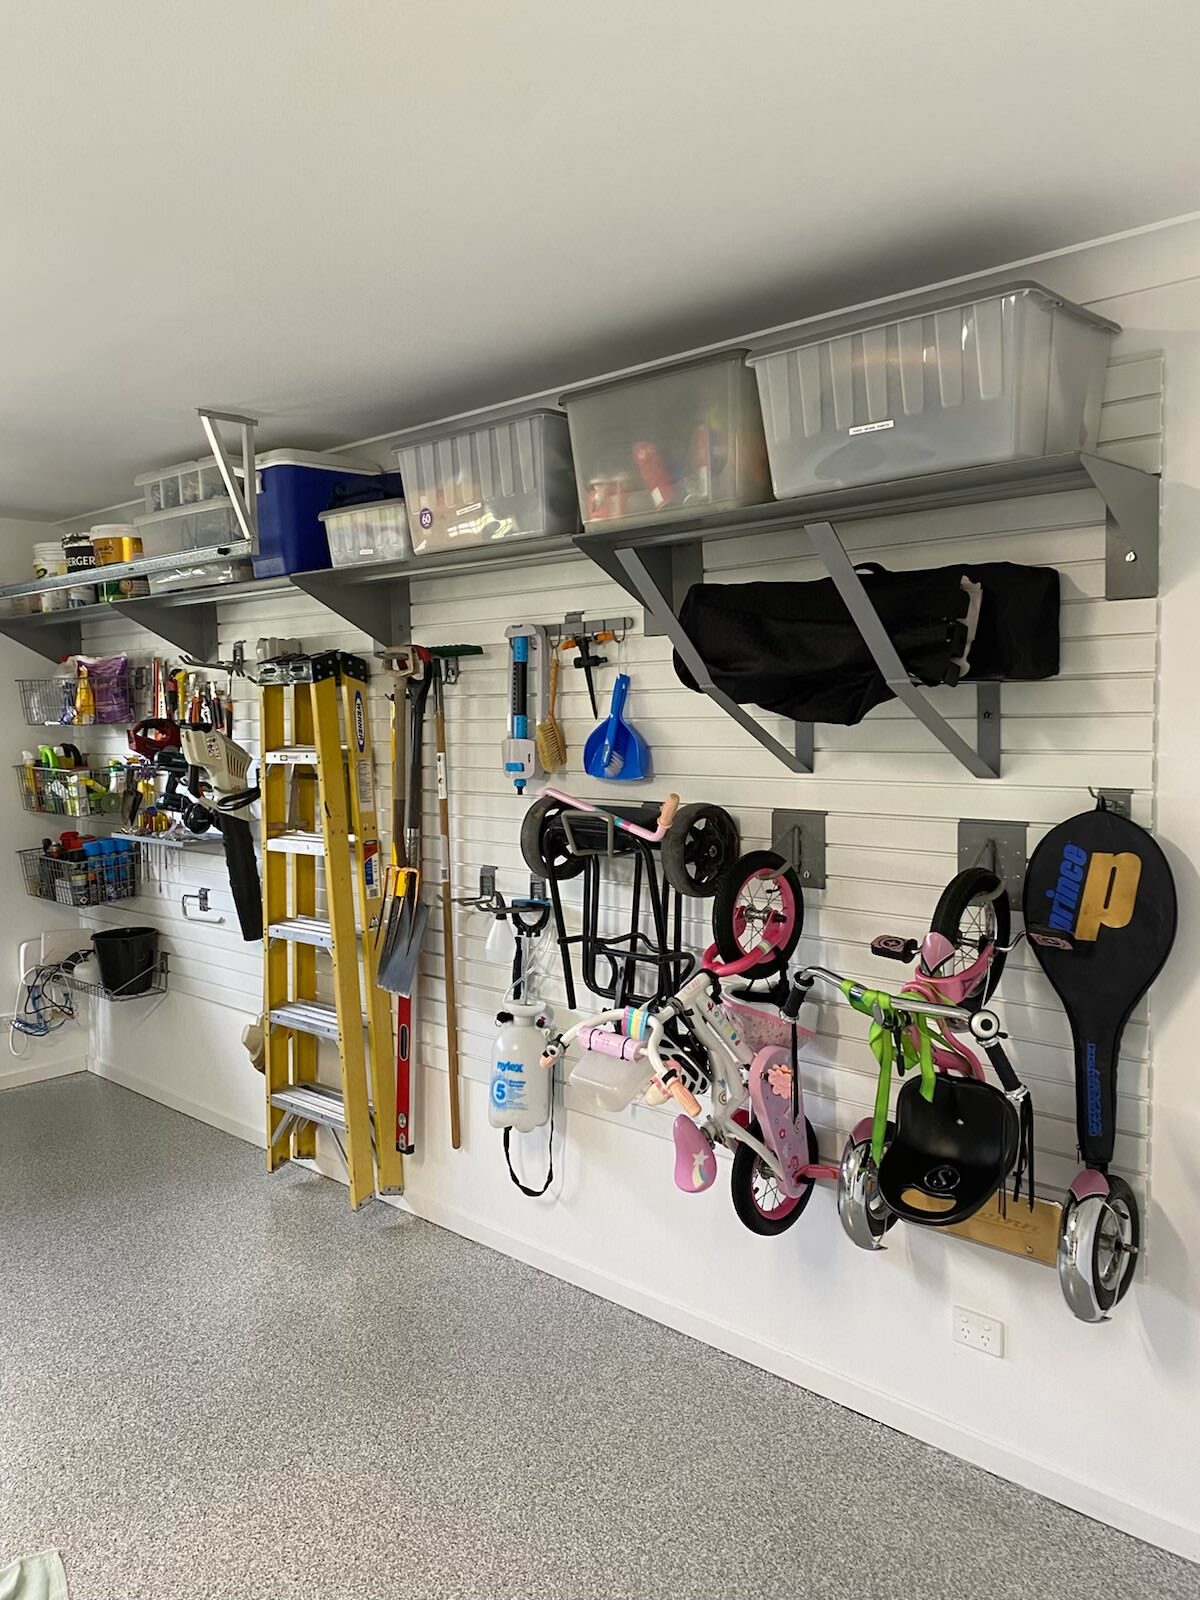 Bins, ladders, bikes, gardening gear, hung with StoreWALL